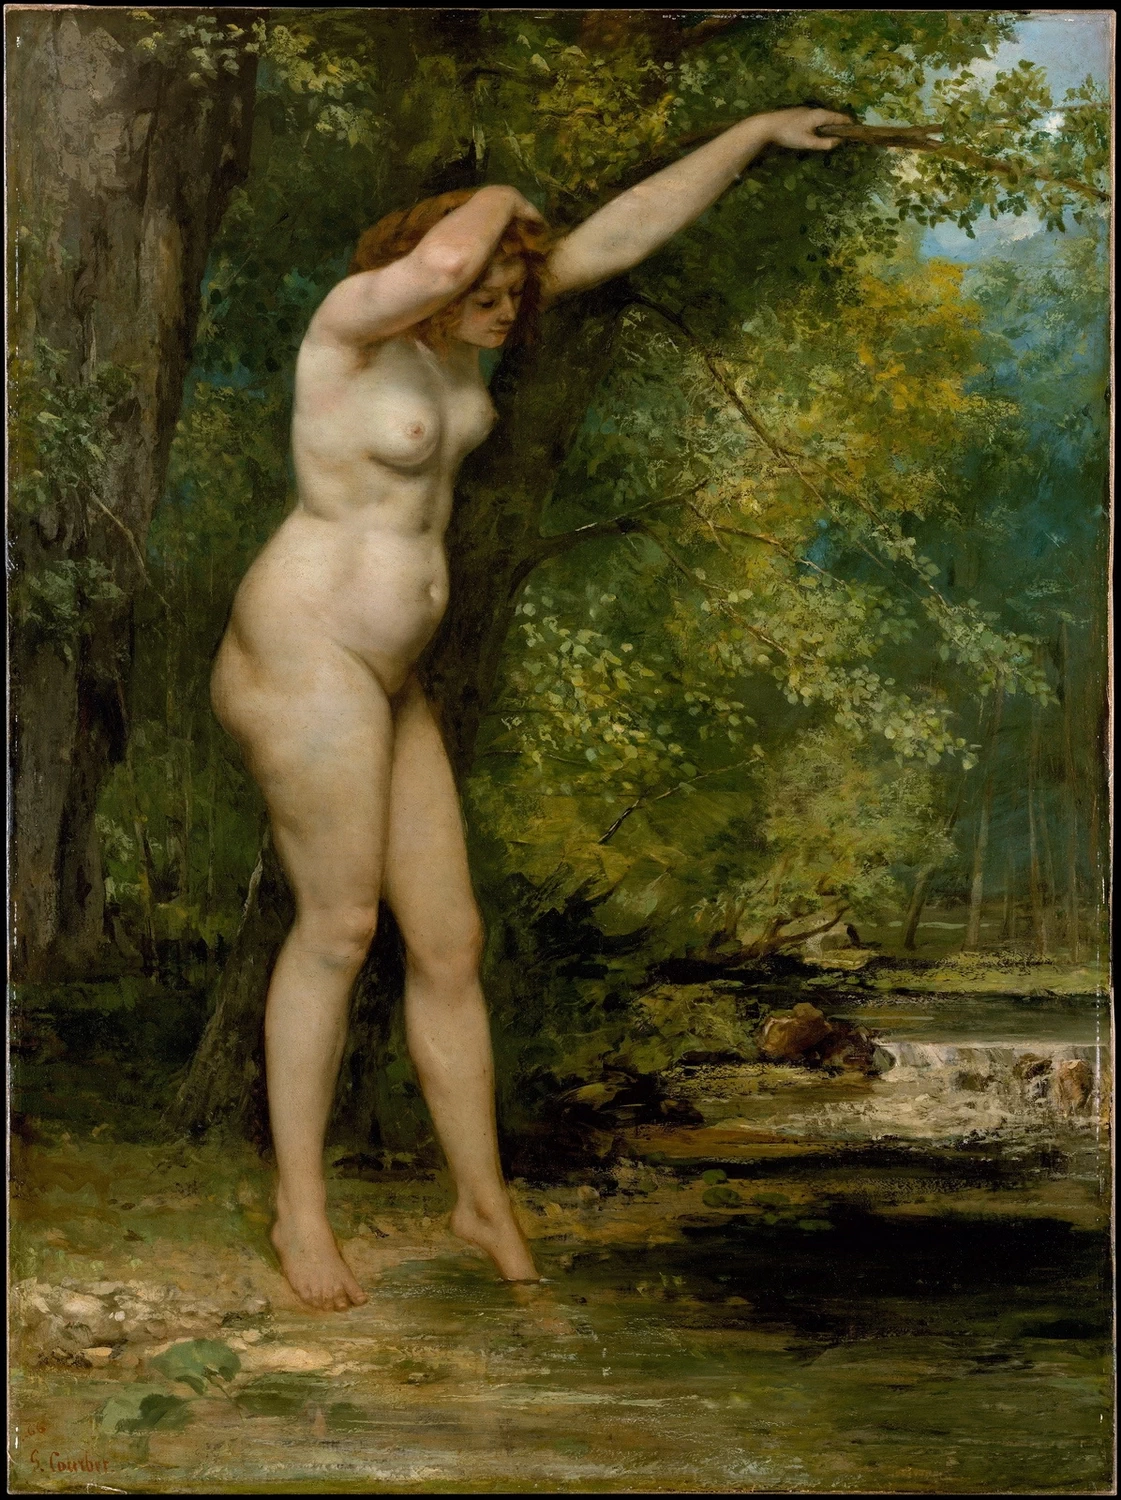   117-La giovane bagnante-Metropolitan Museum of Art-New York